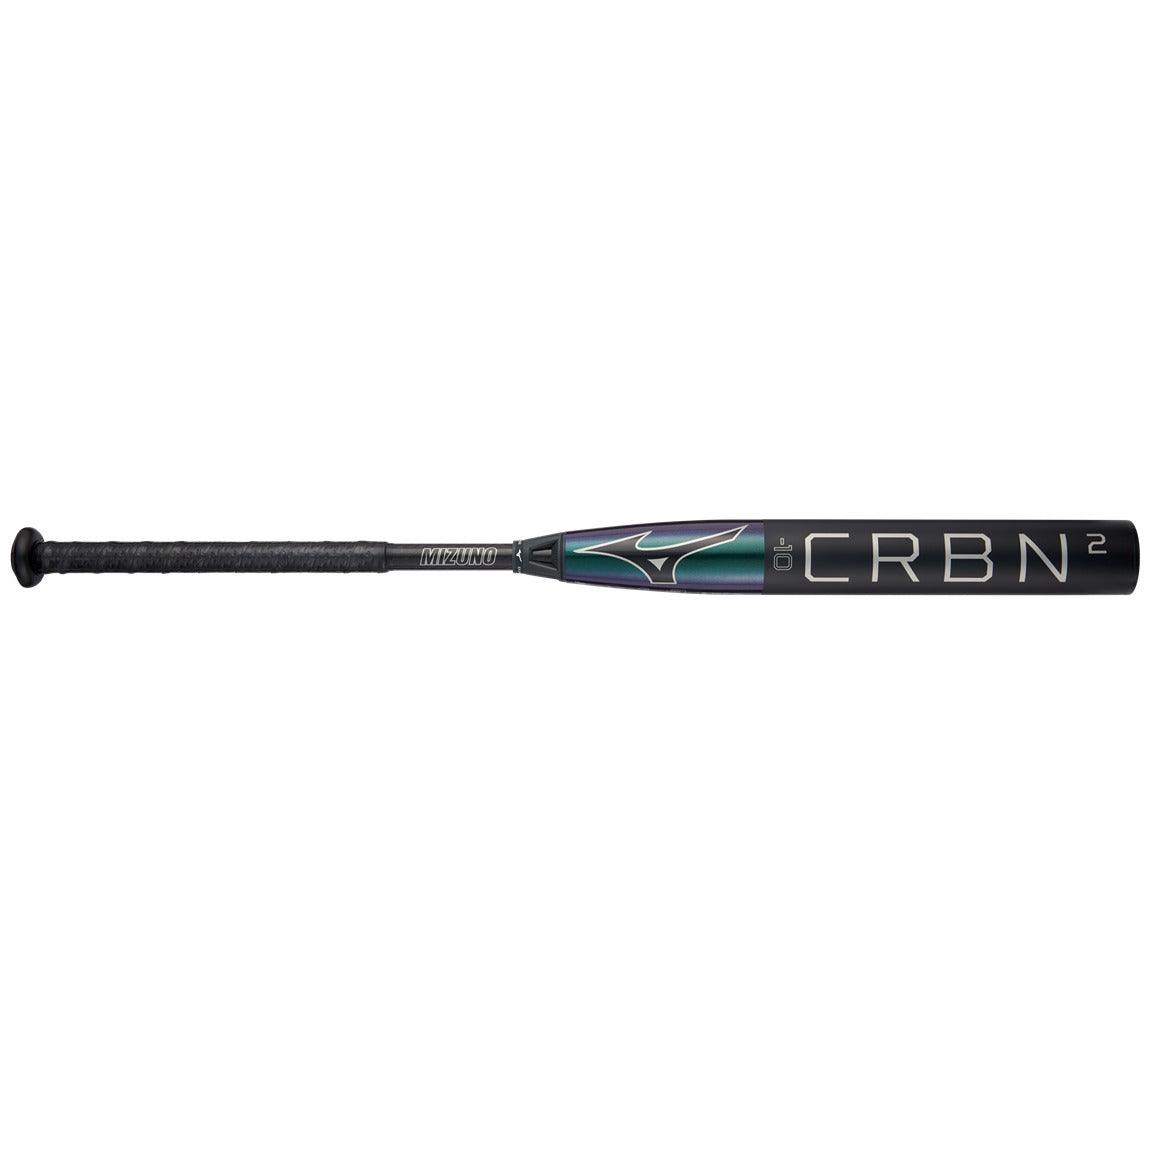 F23-CRBN2 - Fastpitch Softball Bat (-10) - Sports Excellence